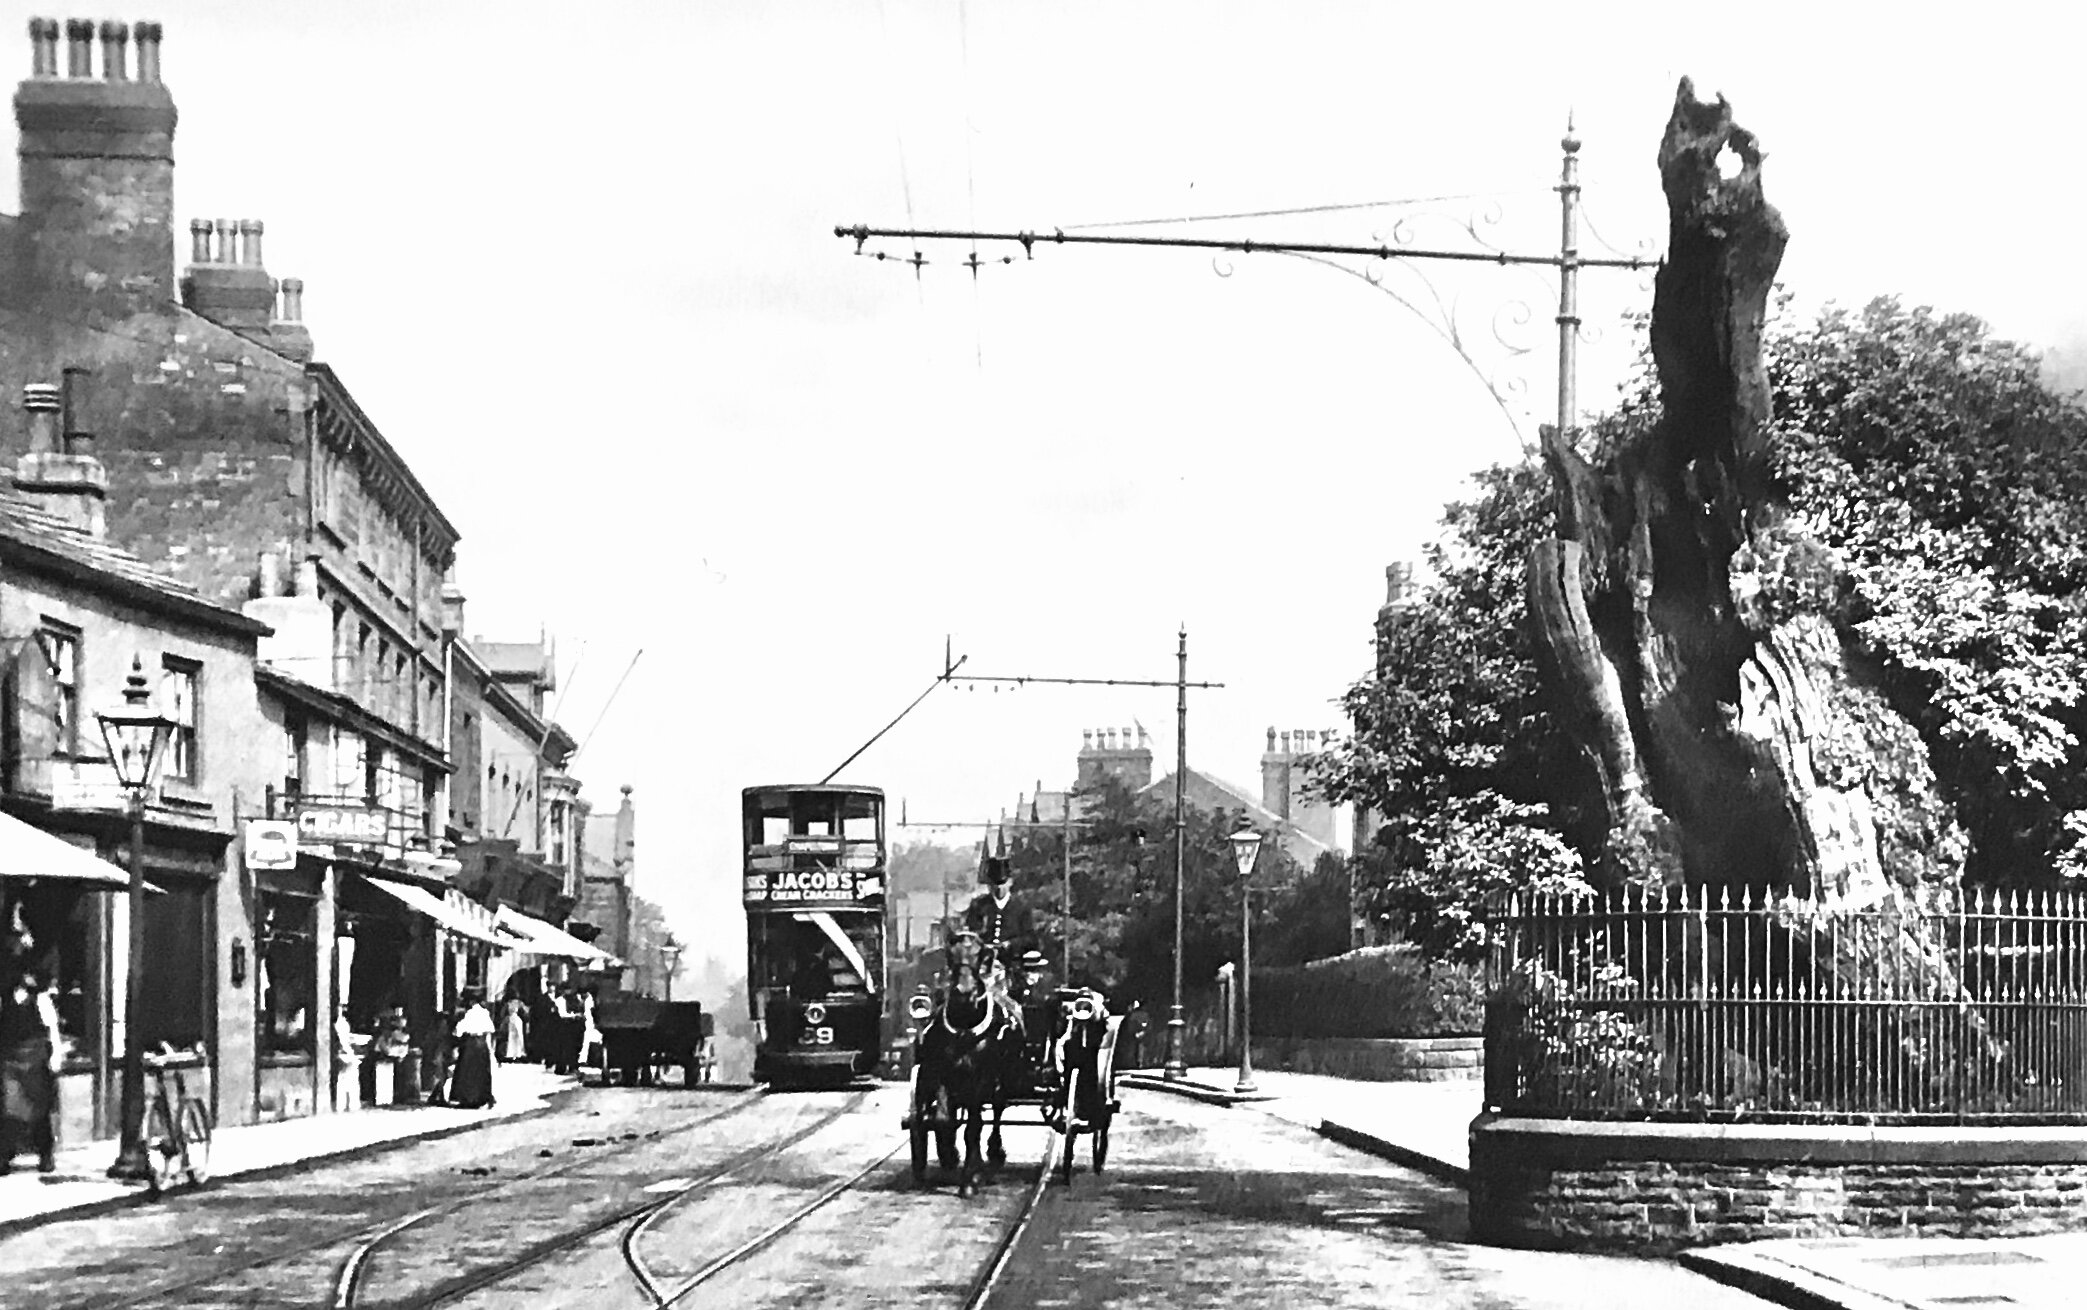 Shire Oak and Otley Road, circa 1890